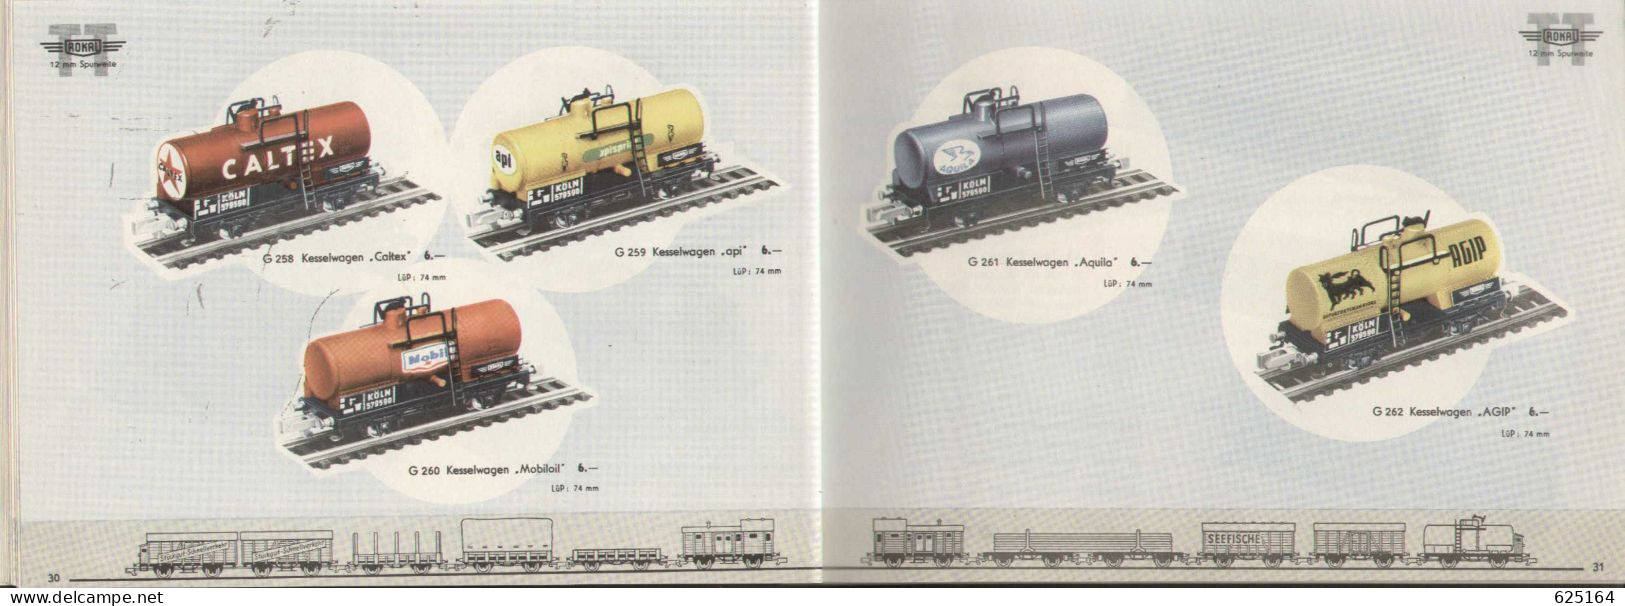 Catalogue Rokal 1959-60 Modellbahn Katalog Spurweit TT 1:120 12 Mm - Deutsch